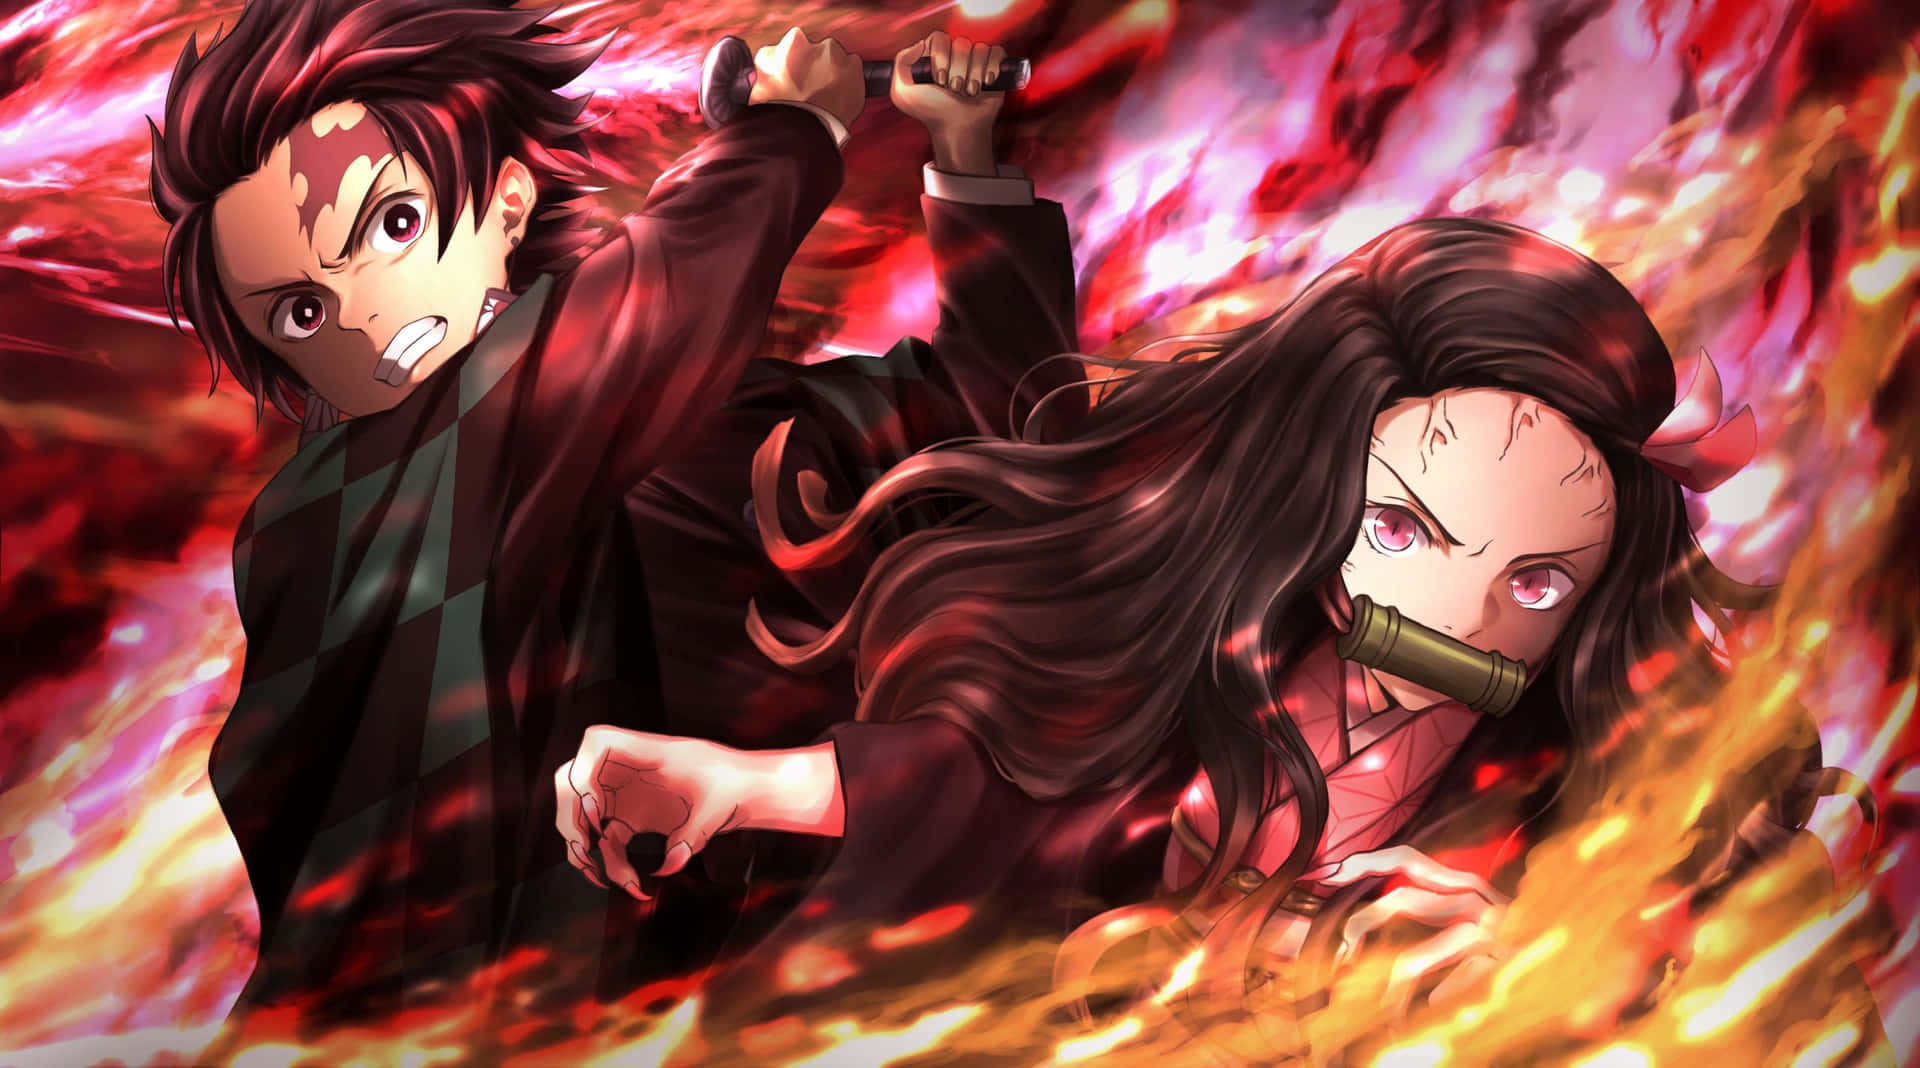 "Demon slayer Kimetsu No Yaiba in fire-inspired background".